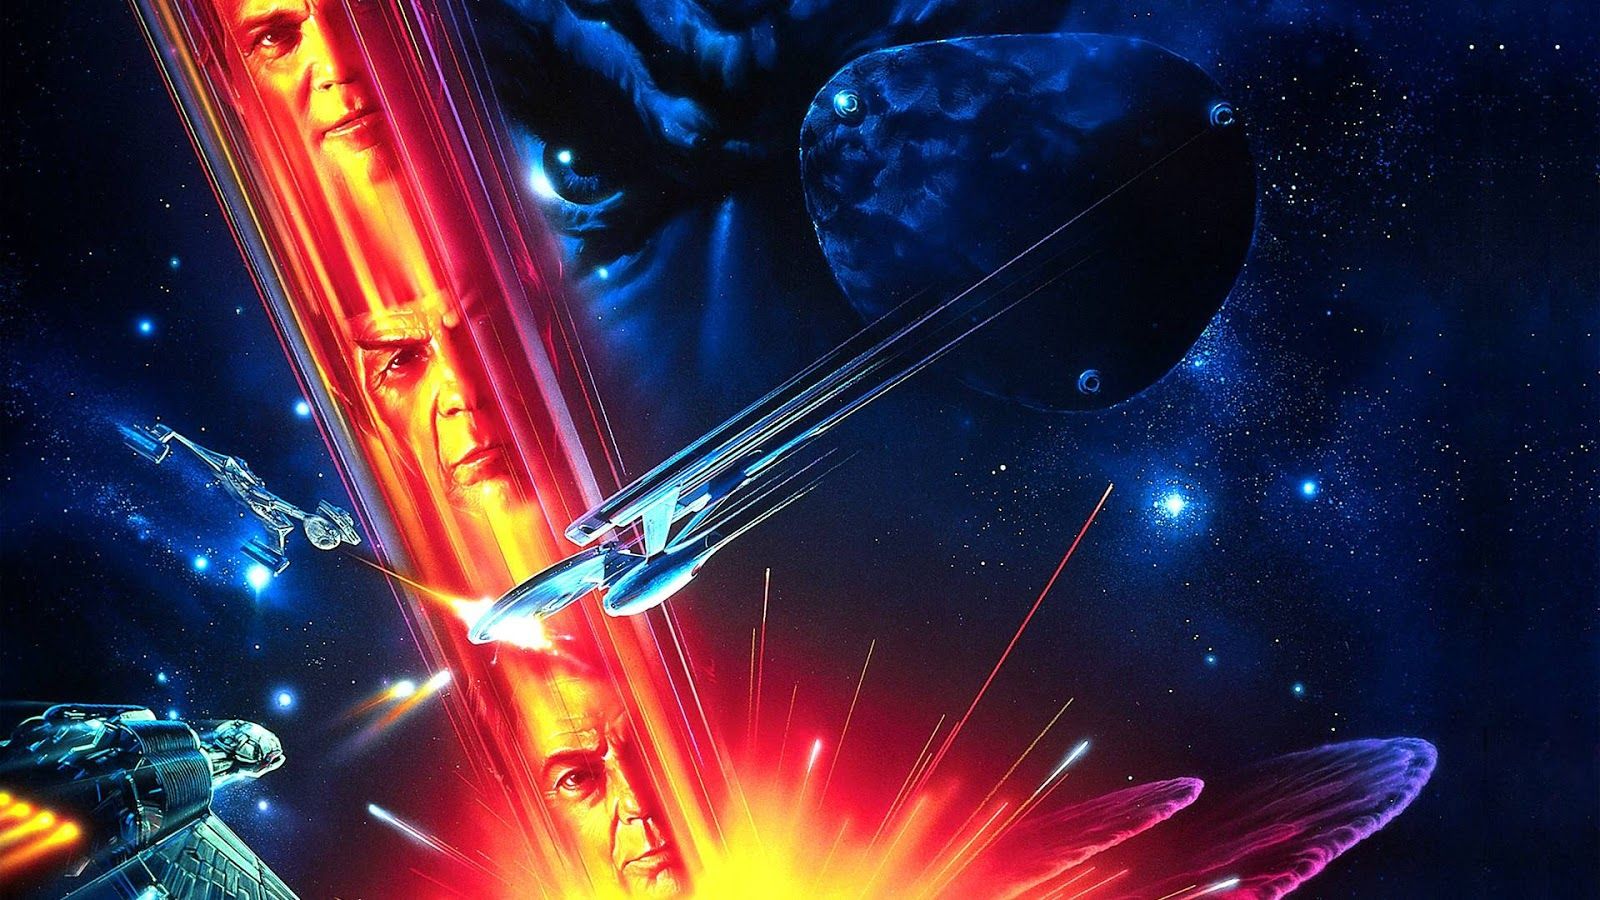 HD Star Trek Wallpaper for Desktop (2019) 2020